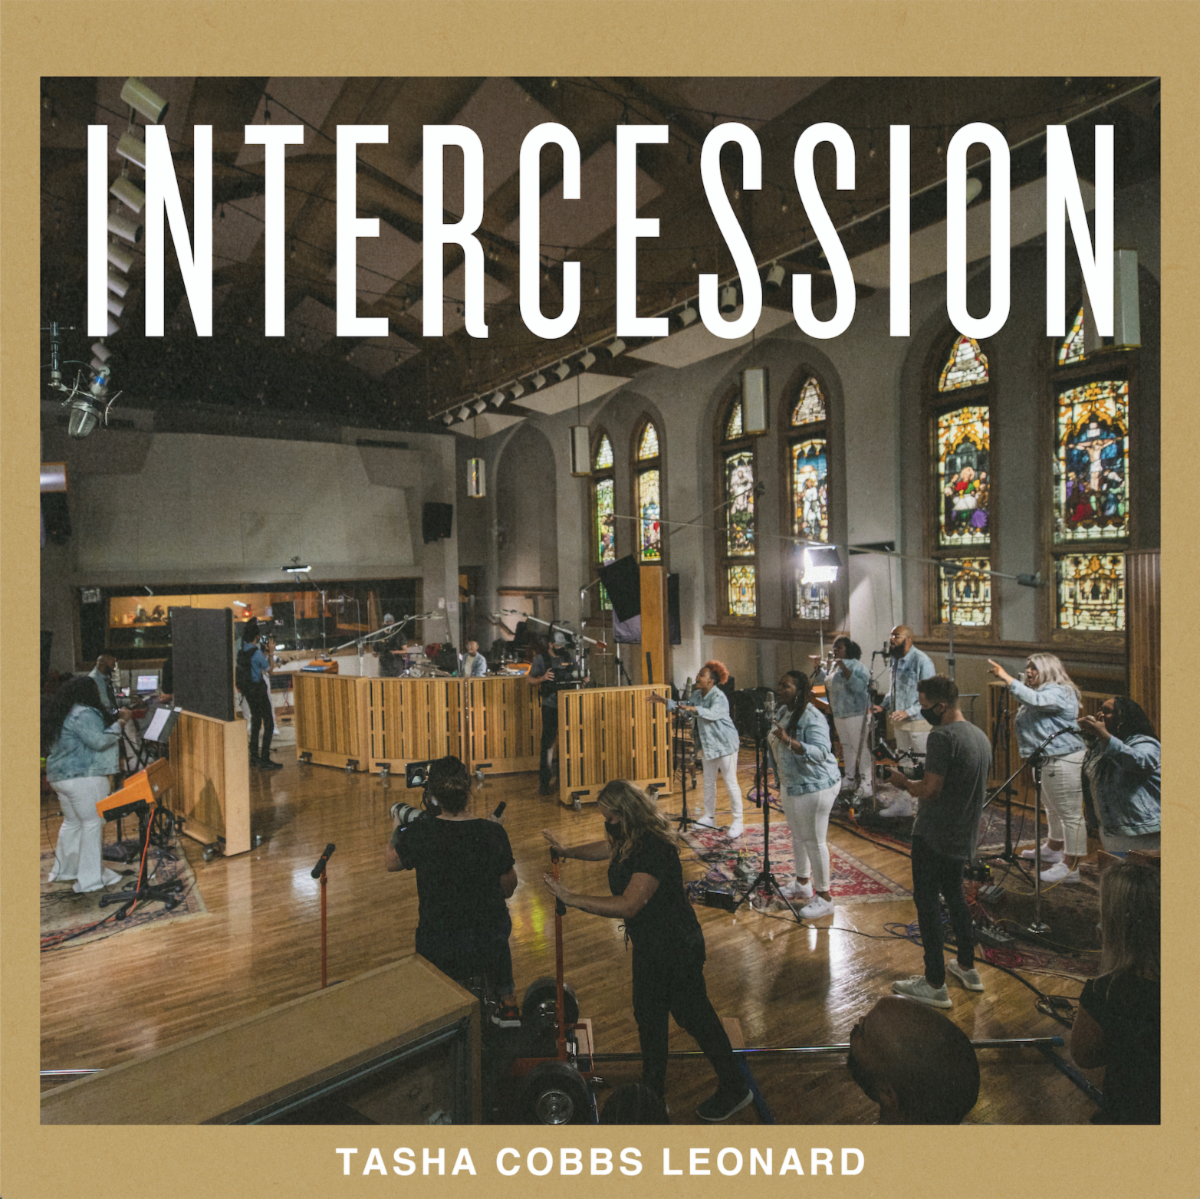 Tasha Cobbs Leonard Releases "Intercession" EP (Available Now) | @tashacobbs |